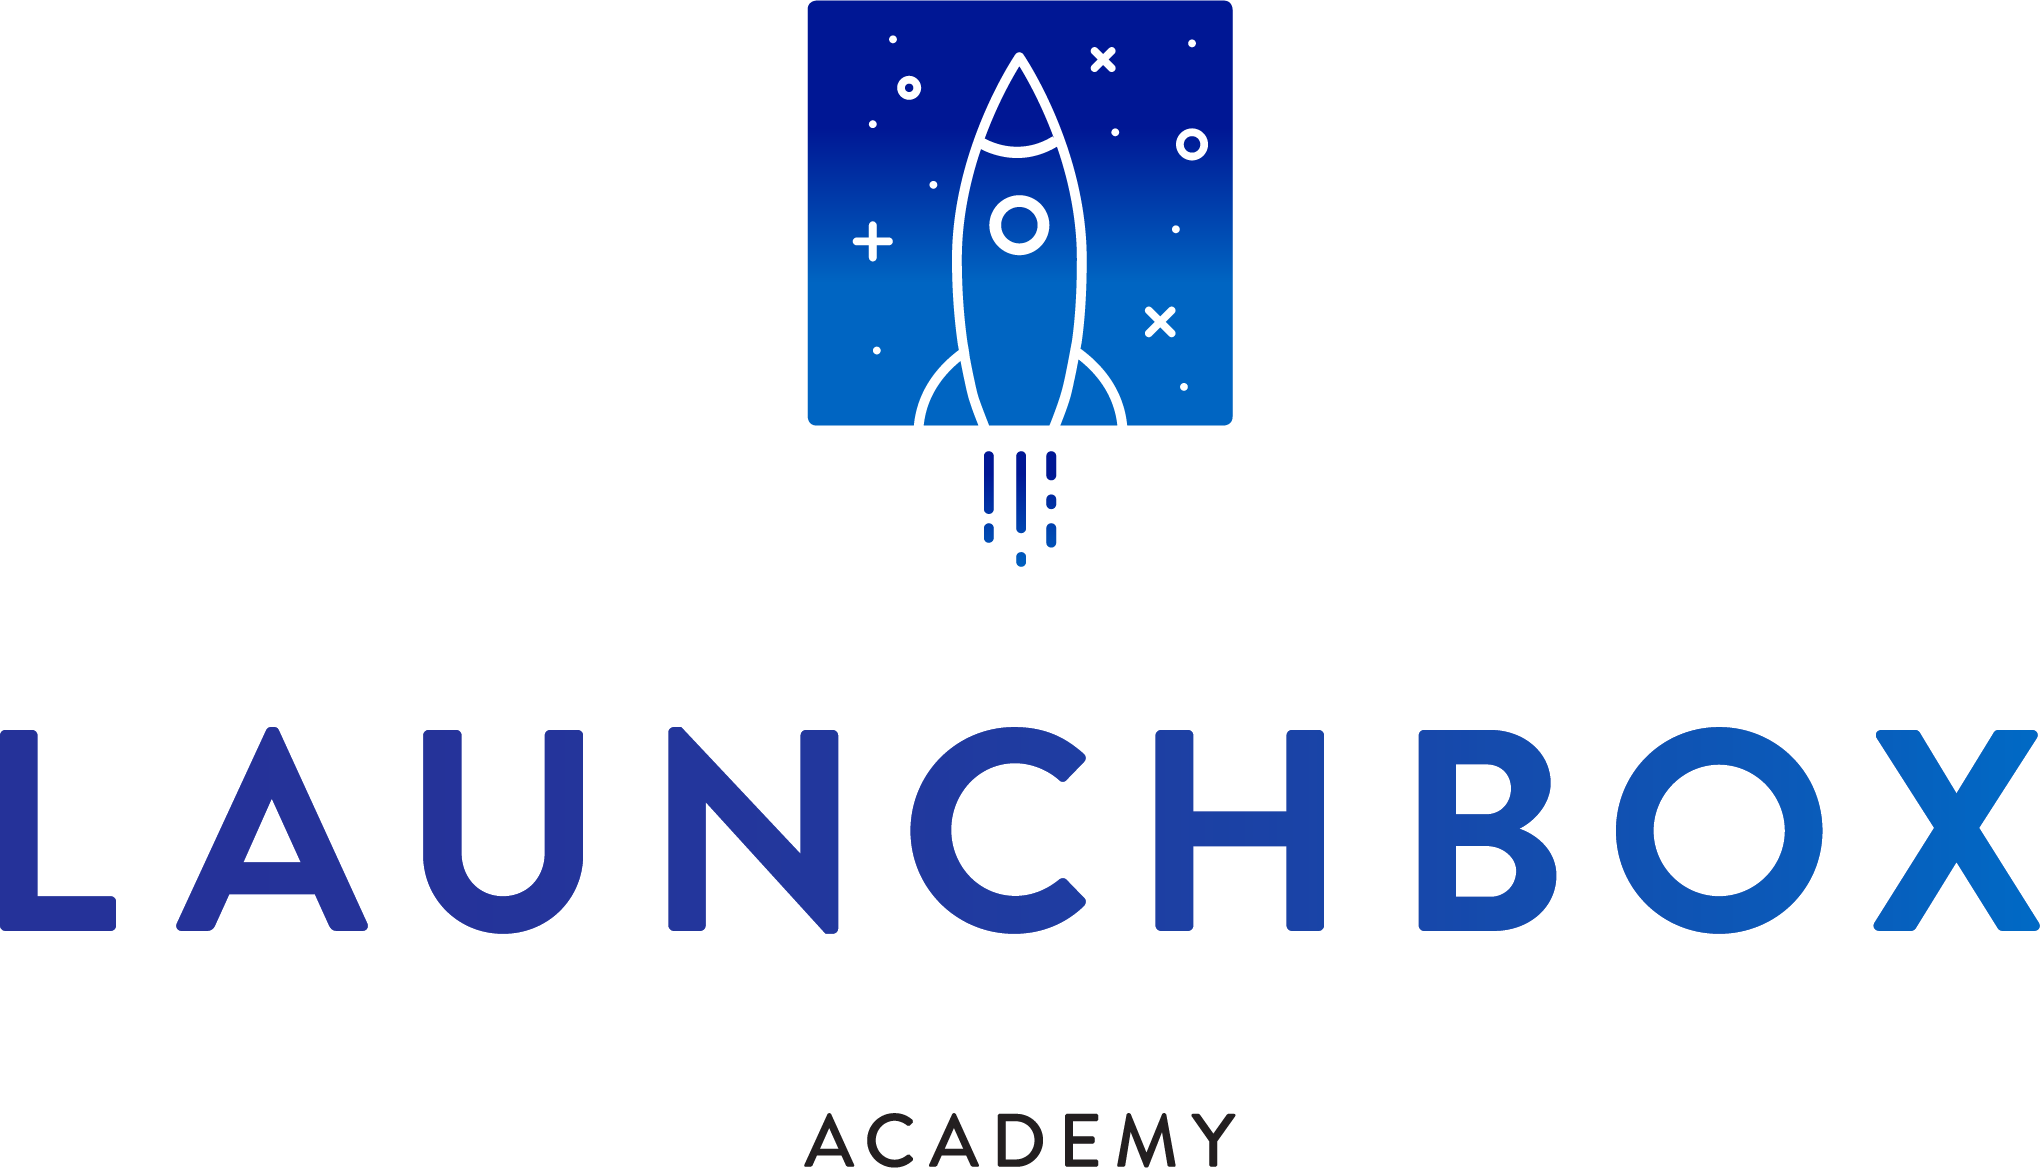 Launch Box Academy